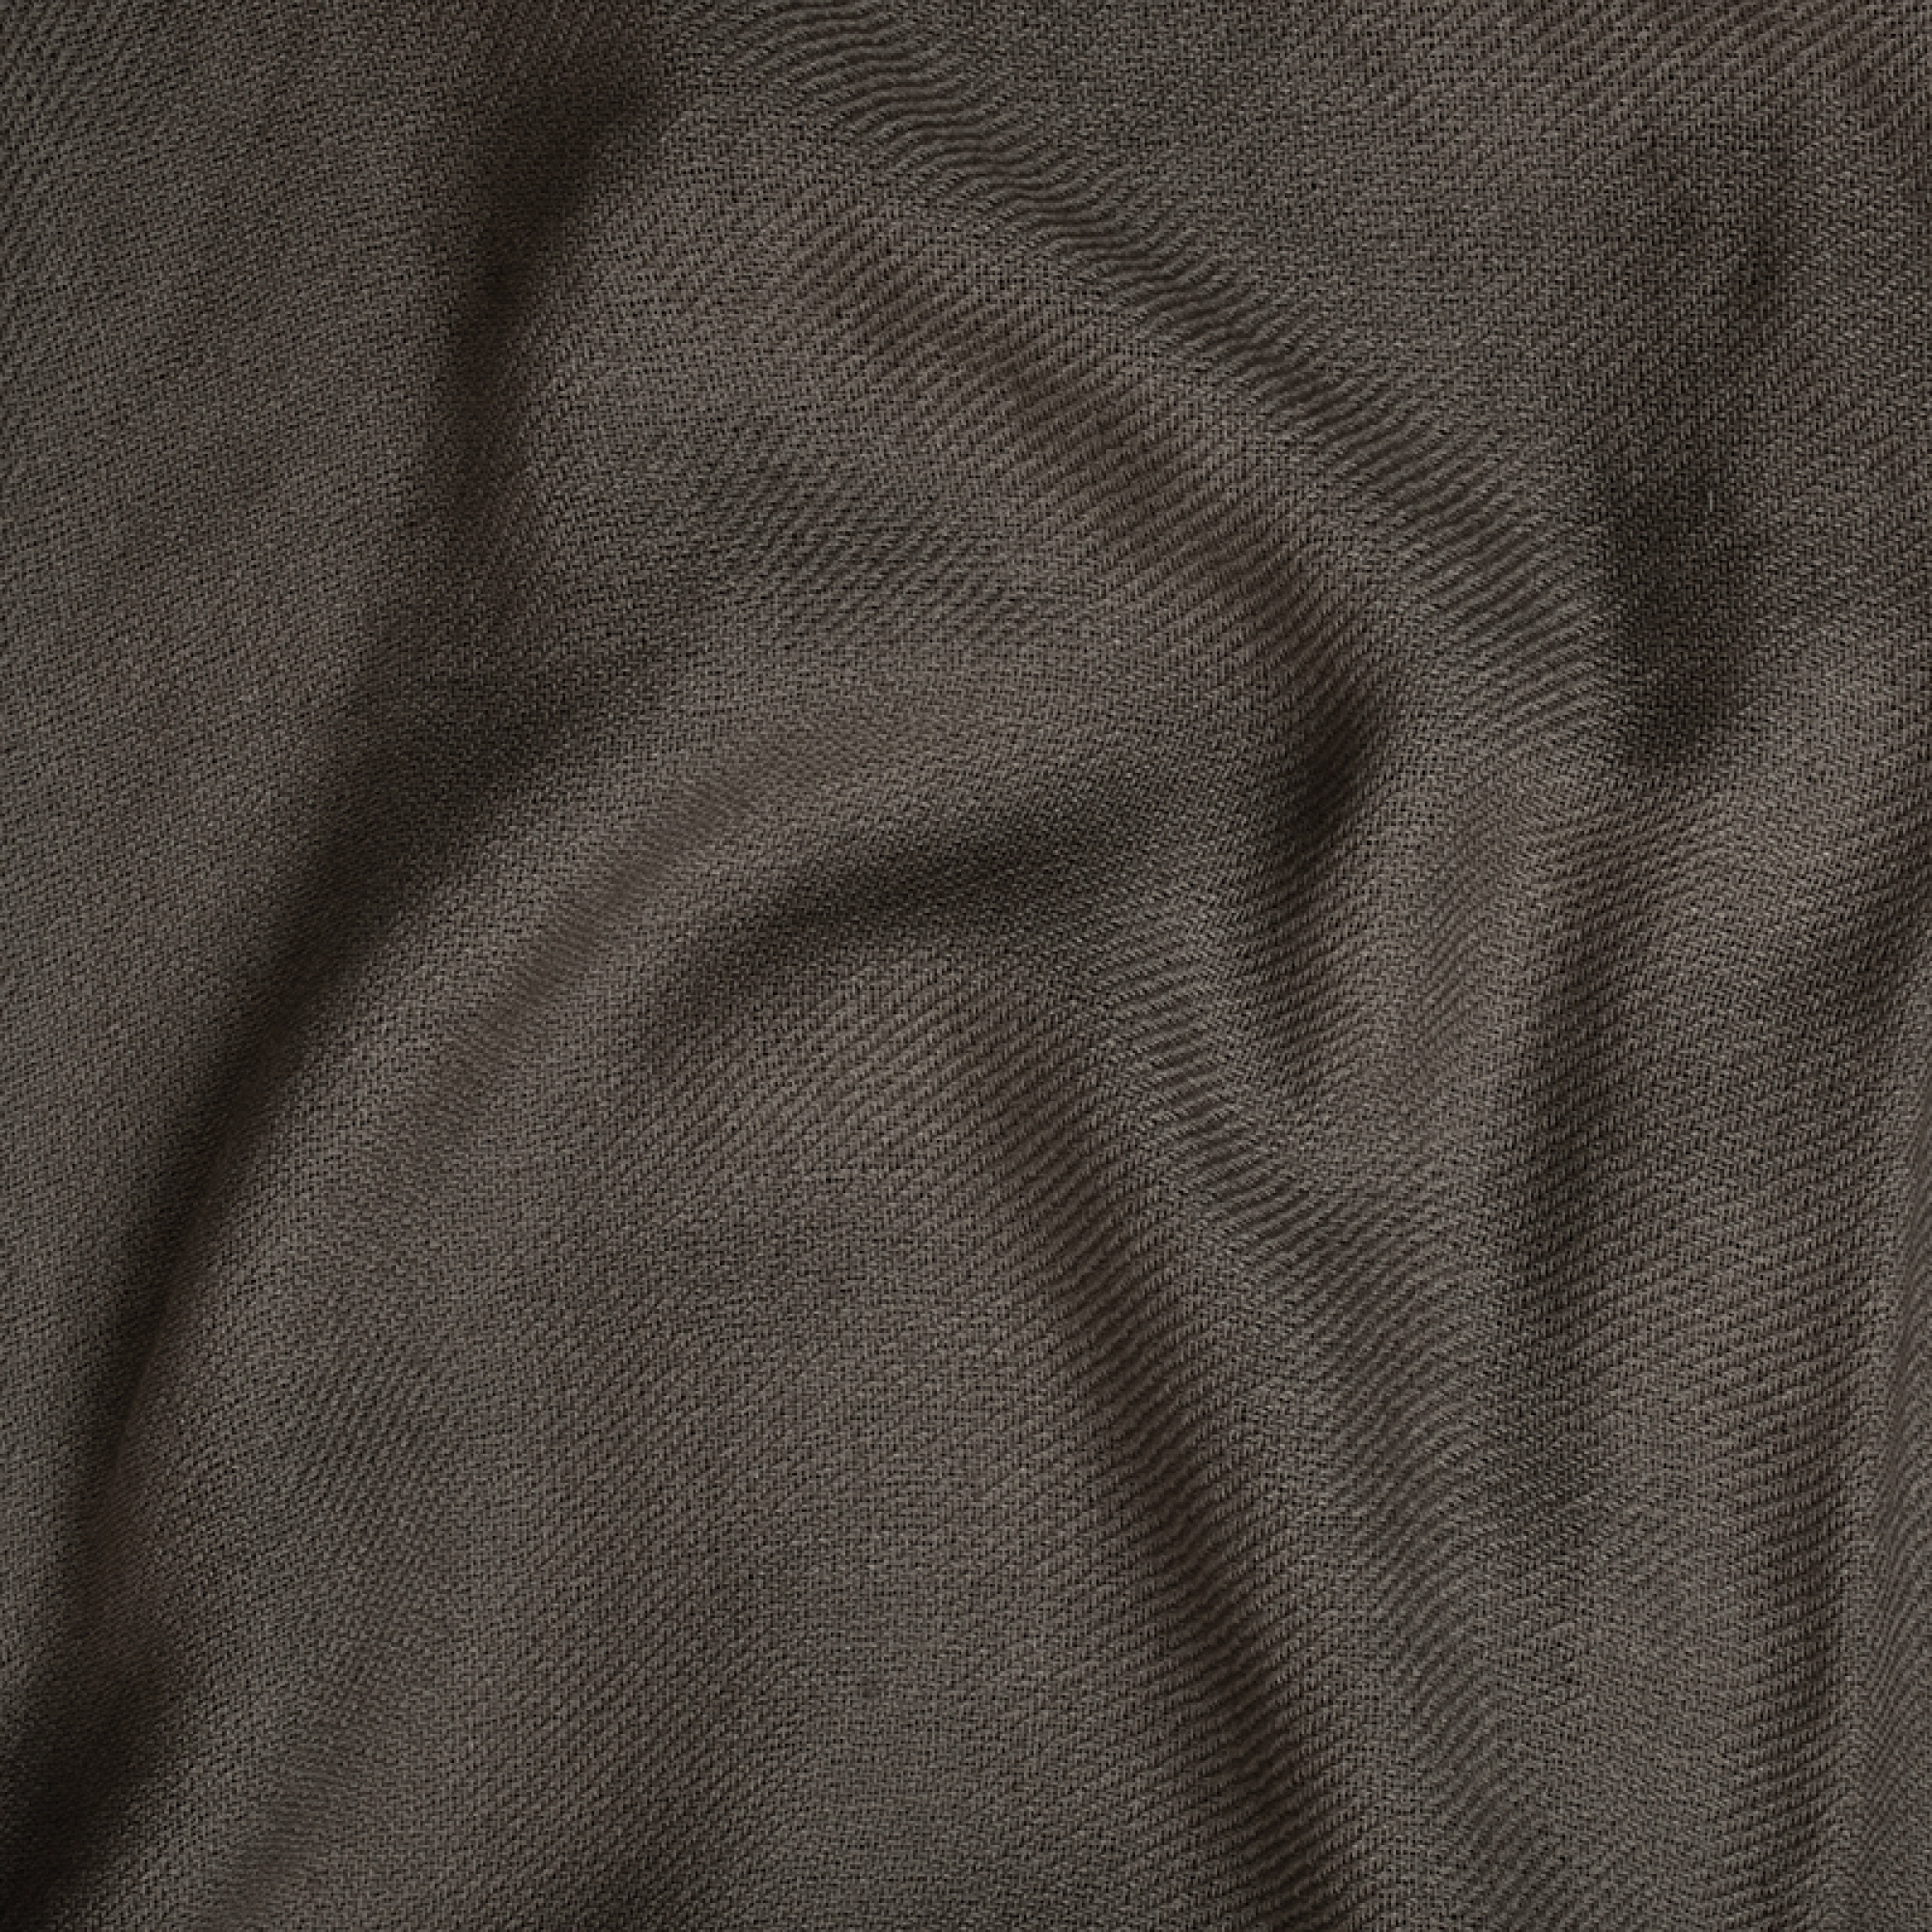 Cashmere accessories blanket toodoo plain s 140 x 200 chestnut 140 x 200 cm